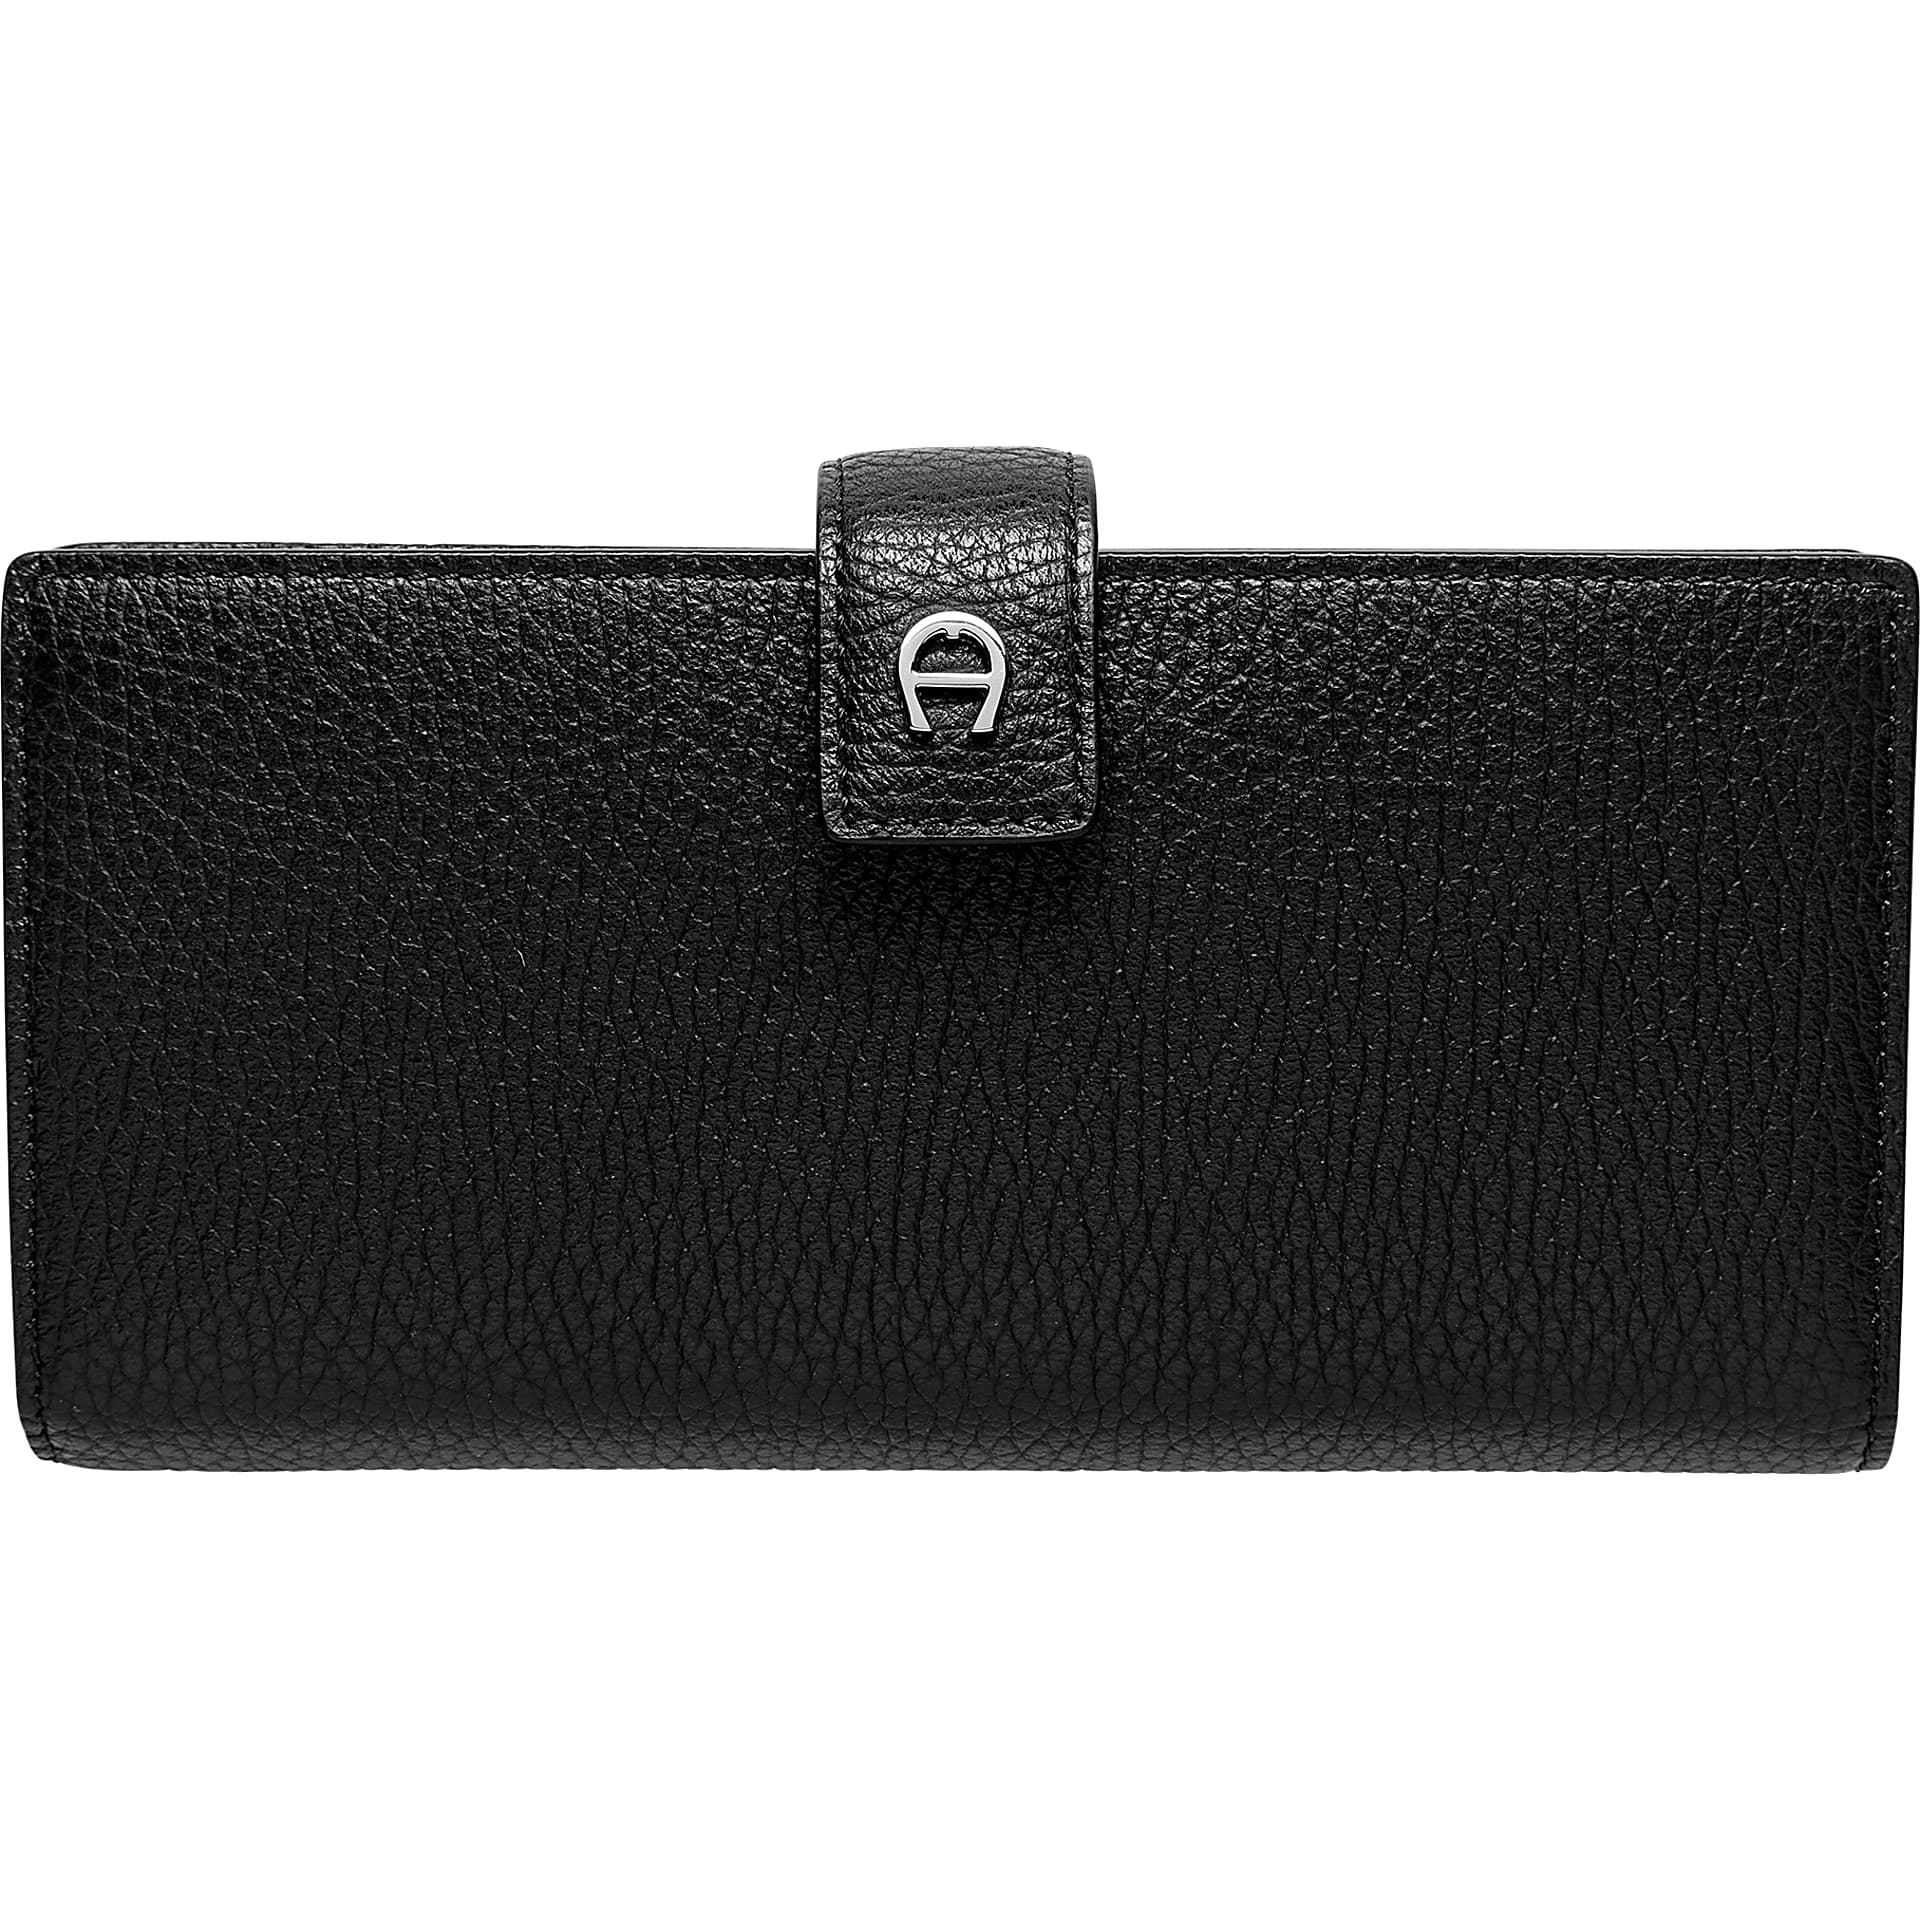 Basics Wallet with Zipper black - Wallets - Men - Aigner